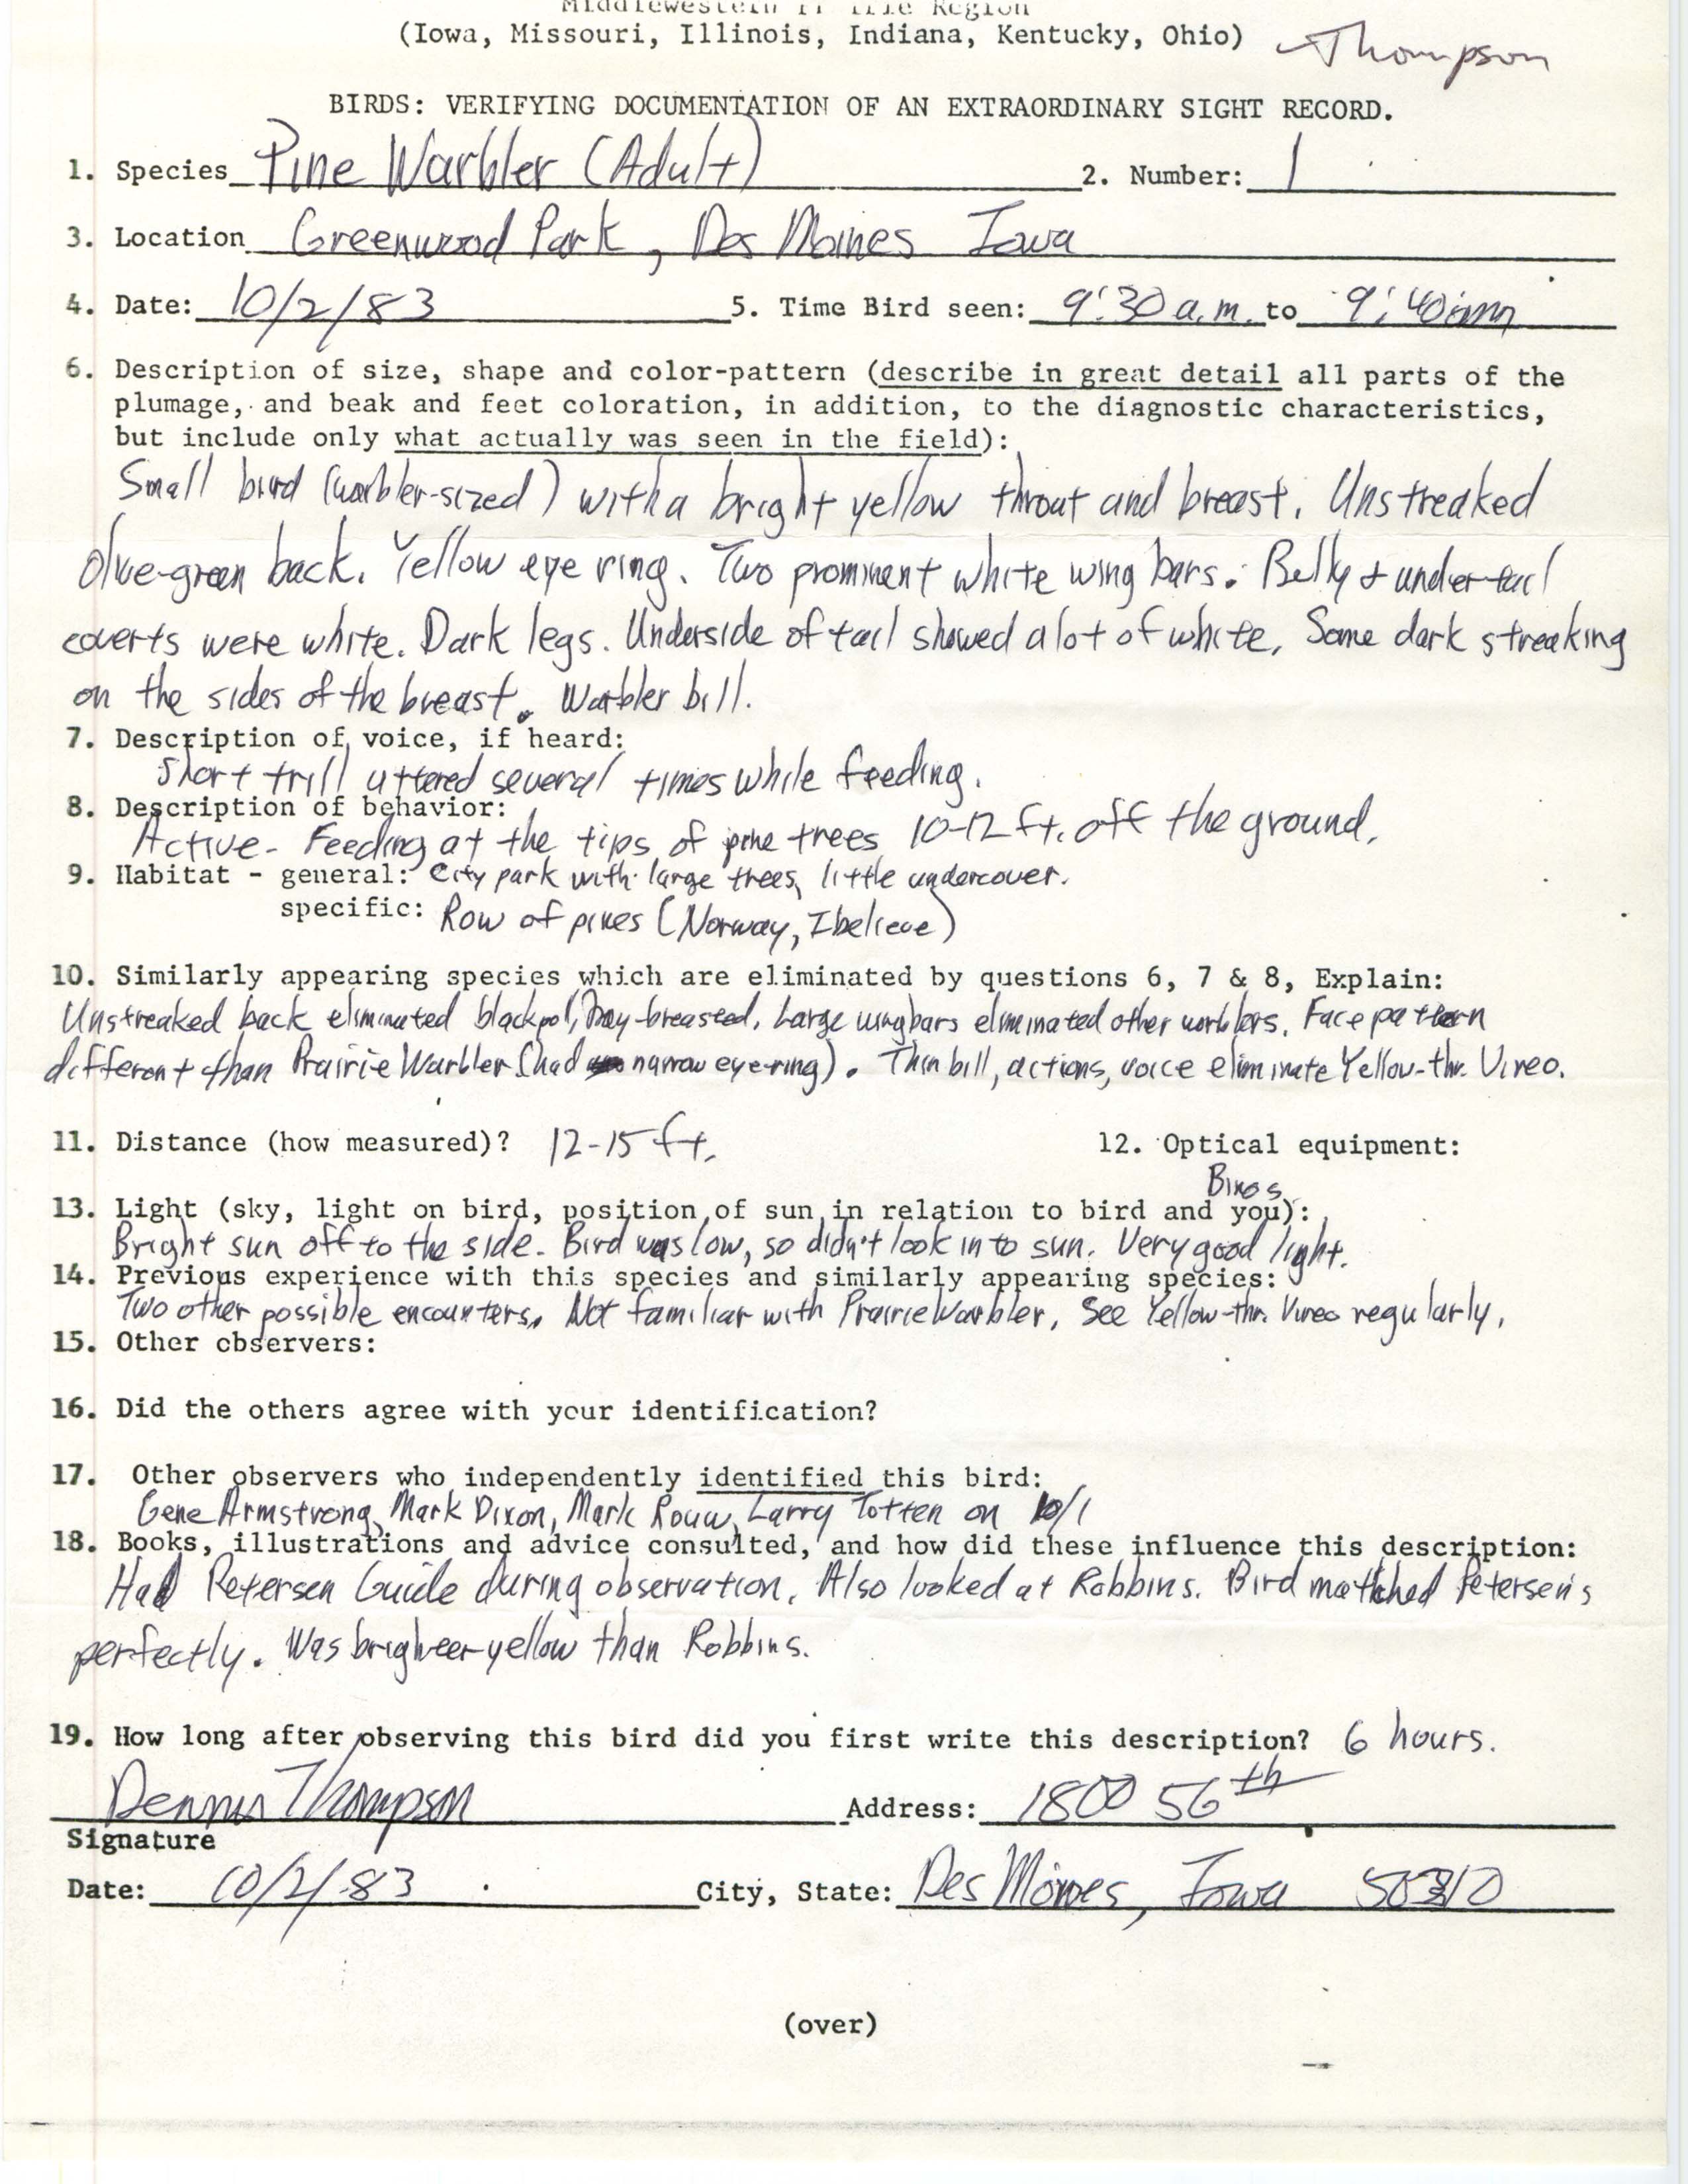 Rare bird documentation form for Pine Warbler at Greenwood Park in Des Moines, 1983